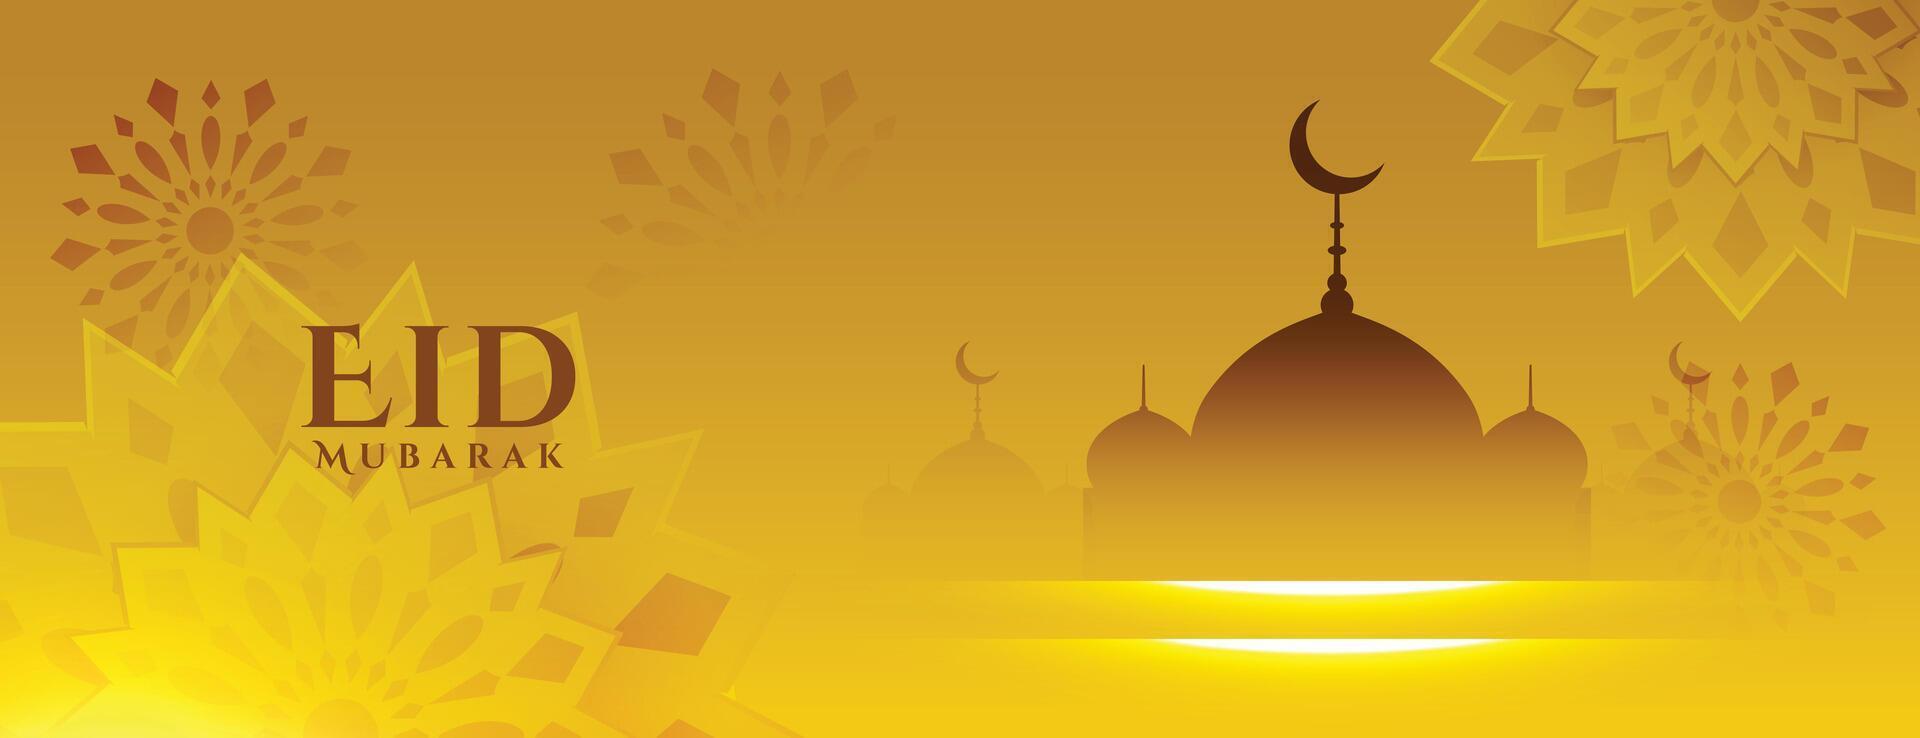 eid mubarak shiny golden banner with mosque and light effect vector